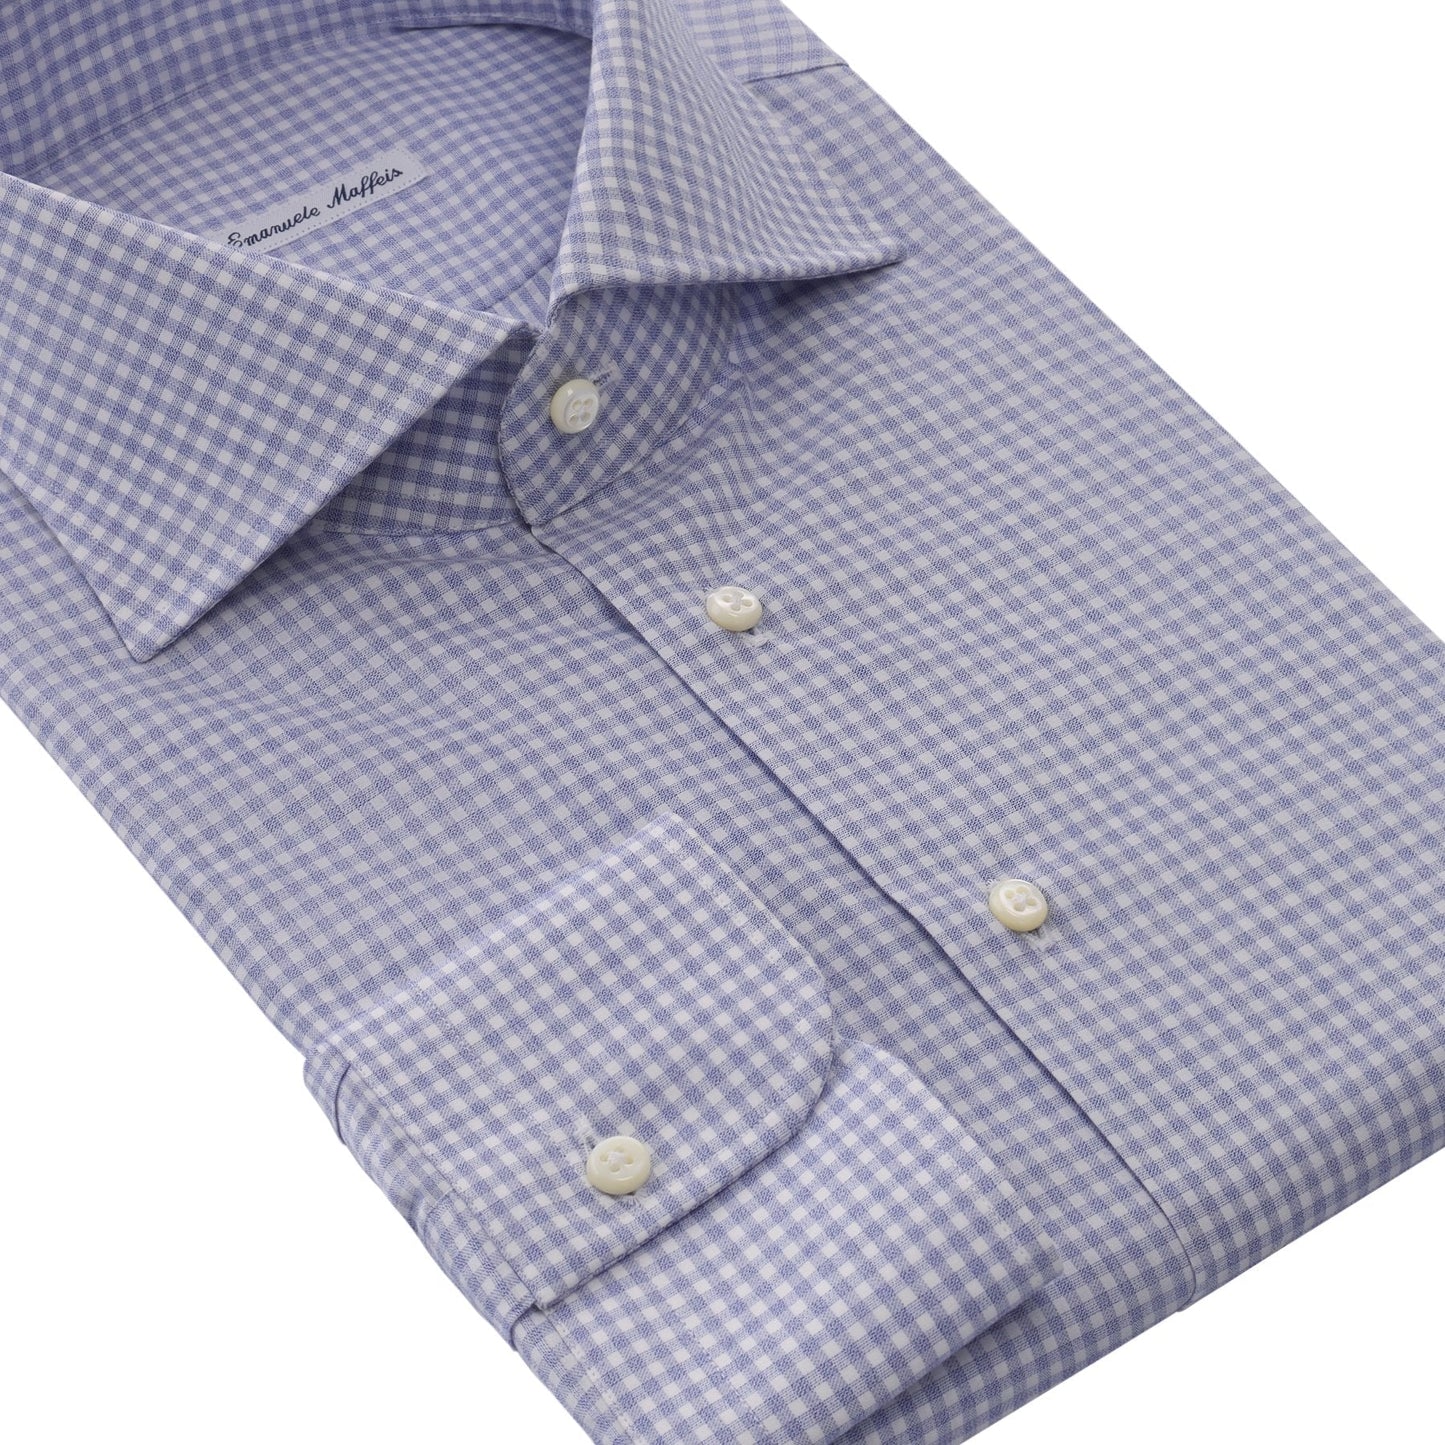 Emanuele Maffeis Checked Cotton Light Blue Shirt with Cutaway Collar - SARTALE